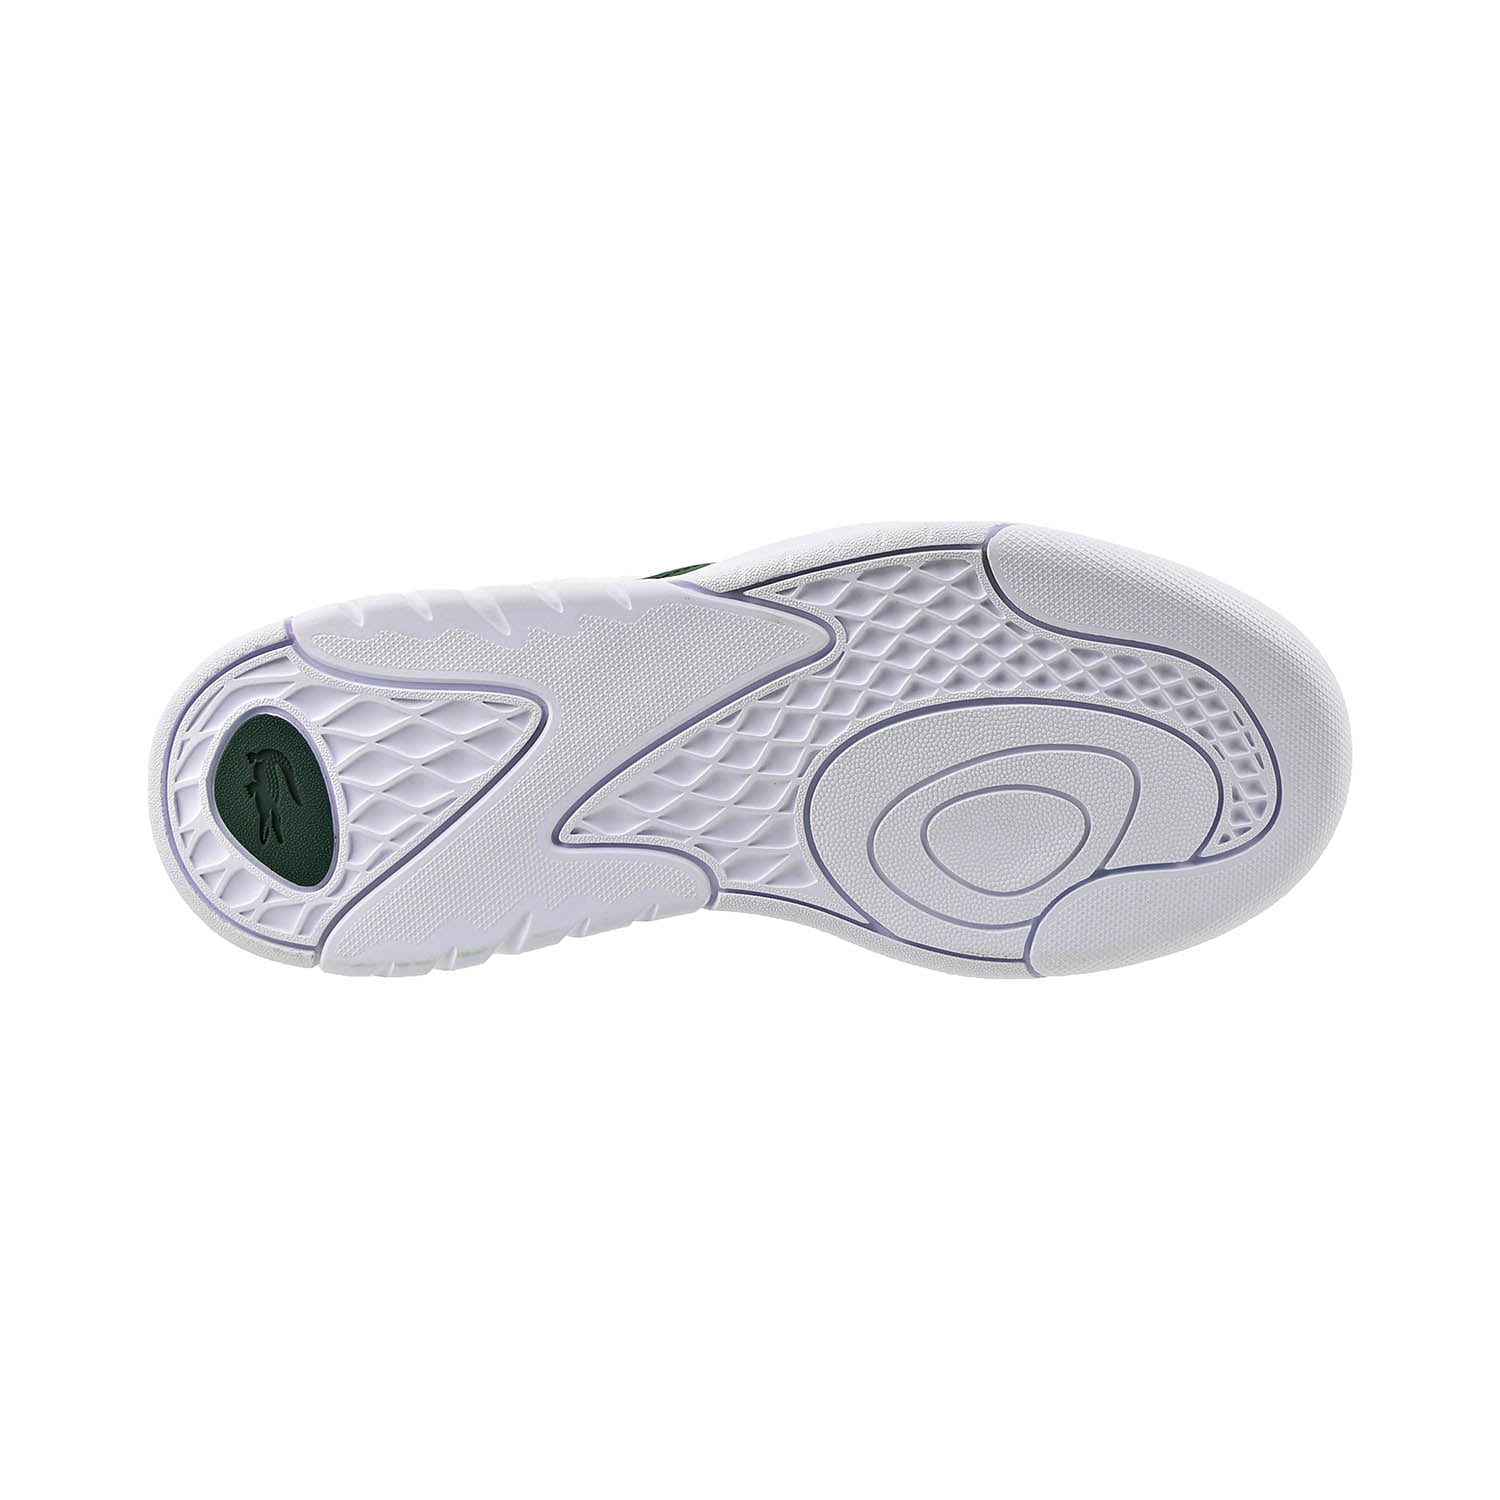 Lacoste Game Advance Luxe Leather White/Multi Men's Shoe